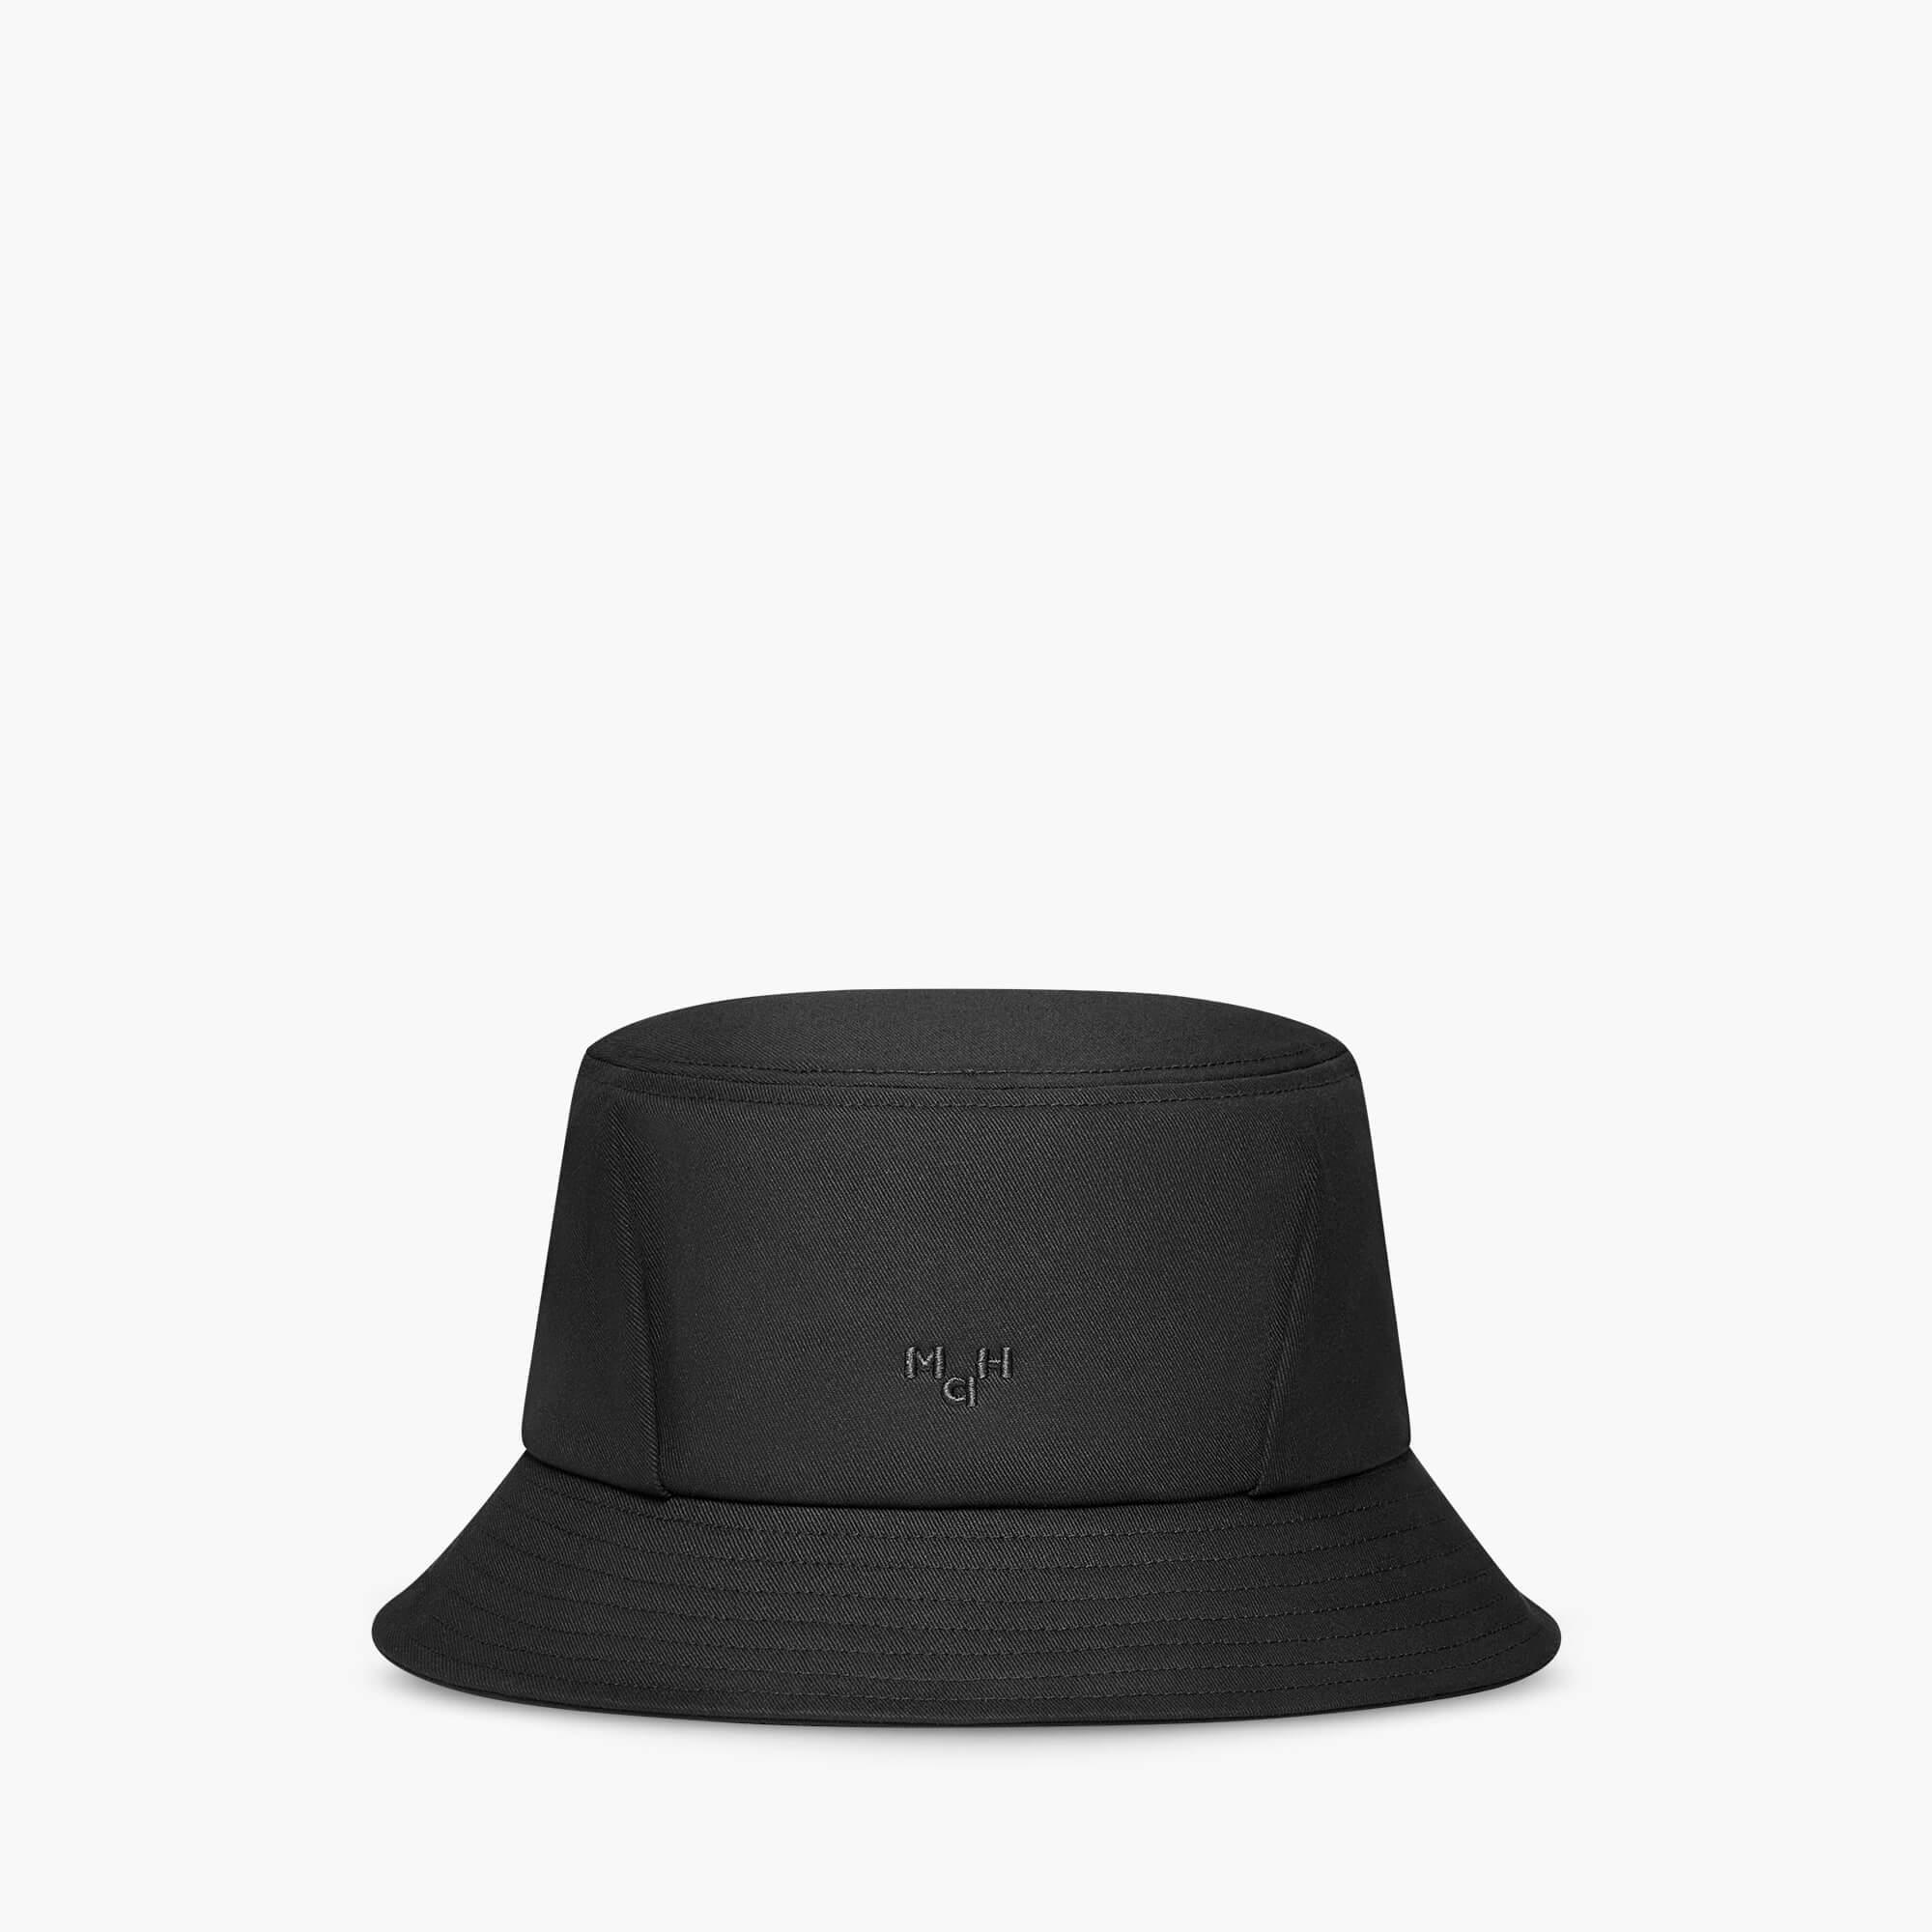 Cotton Sun hat For Summer - black